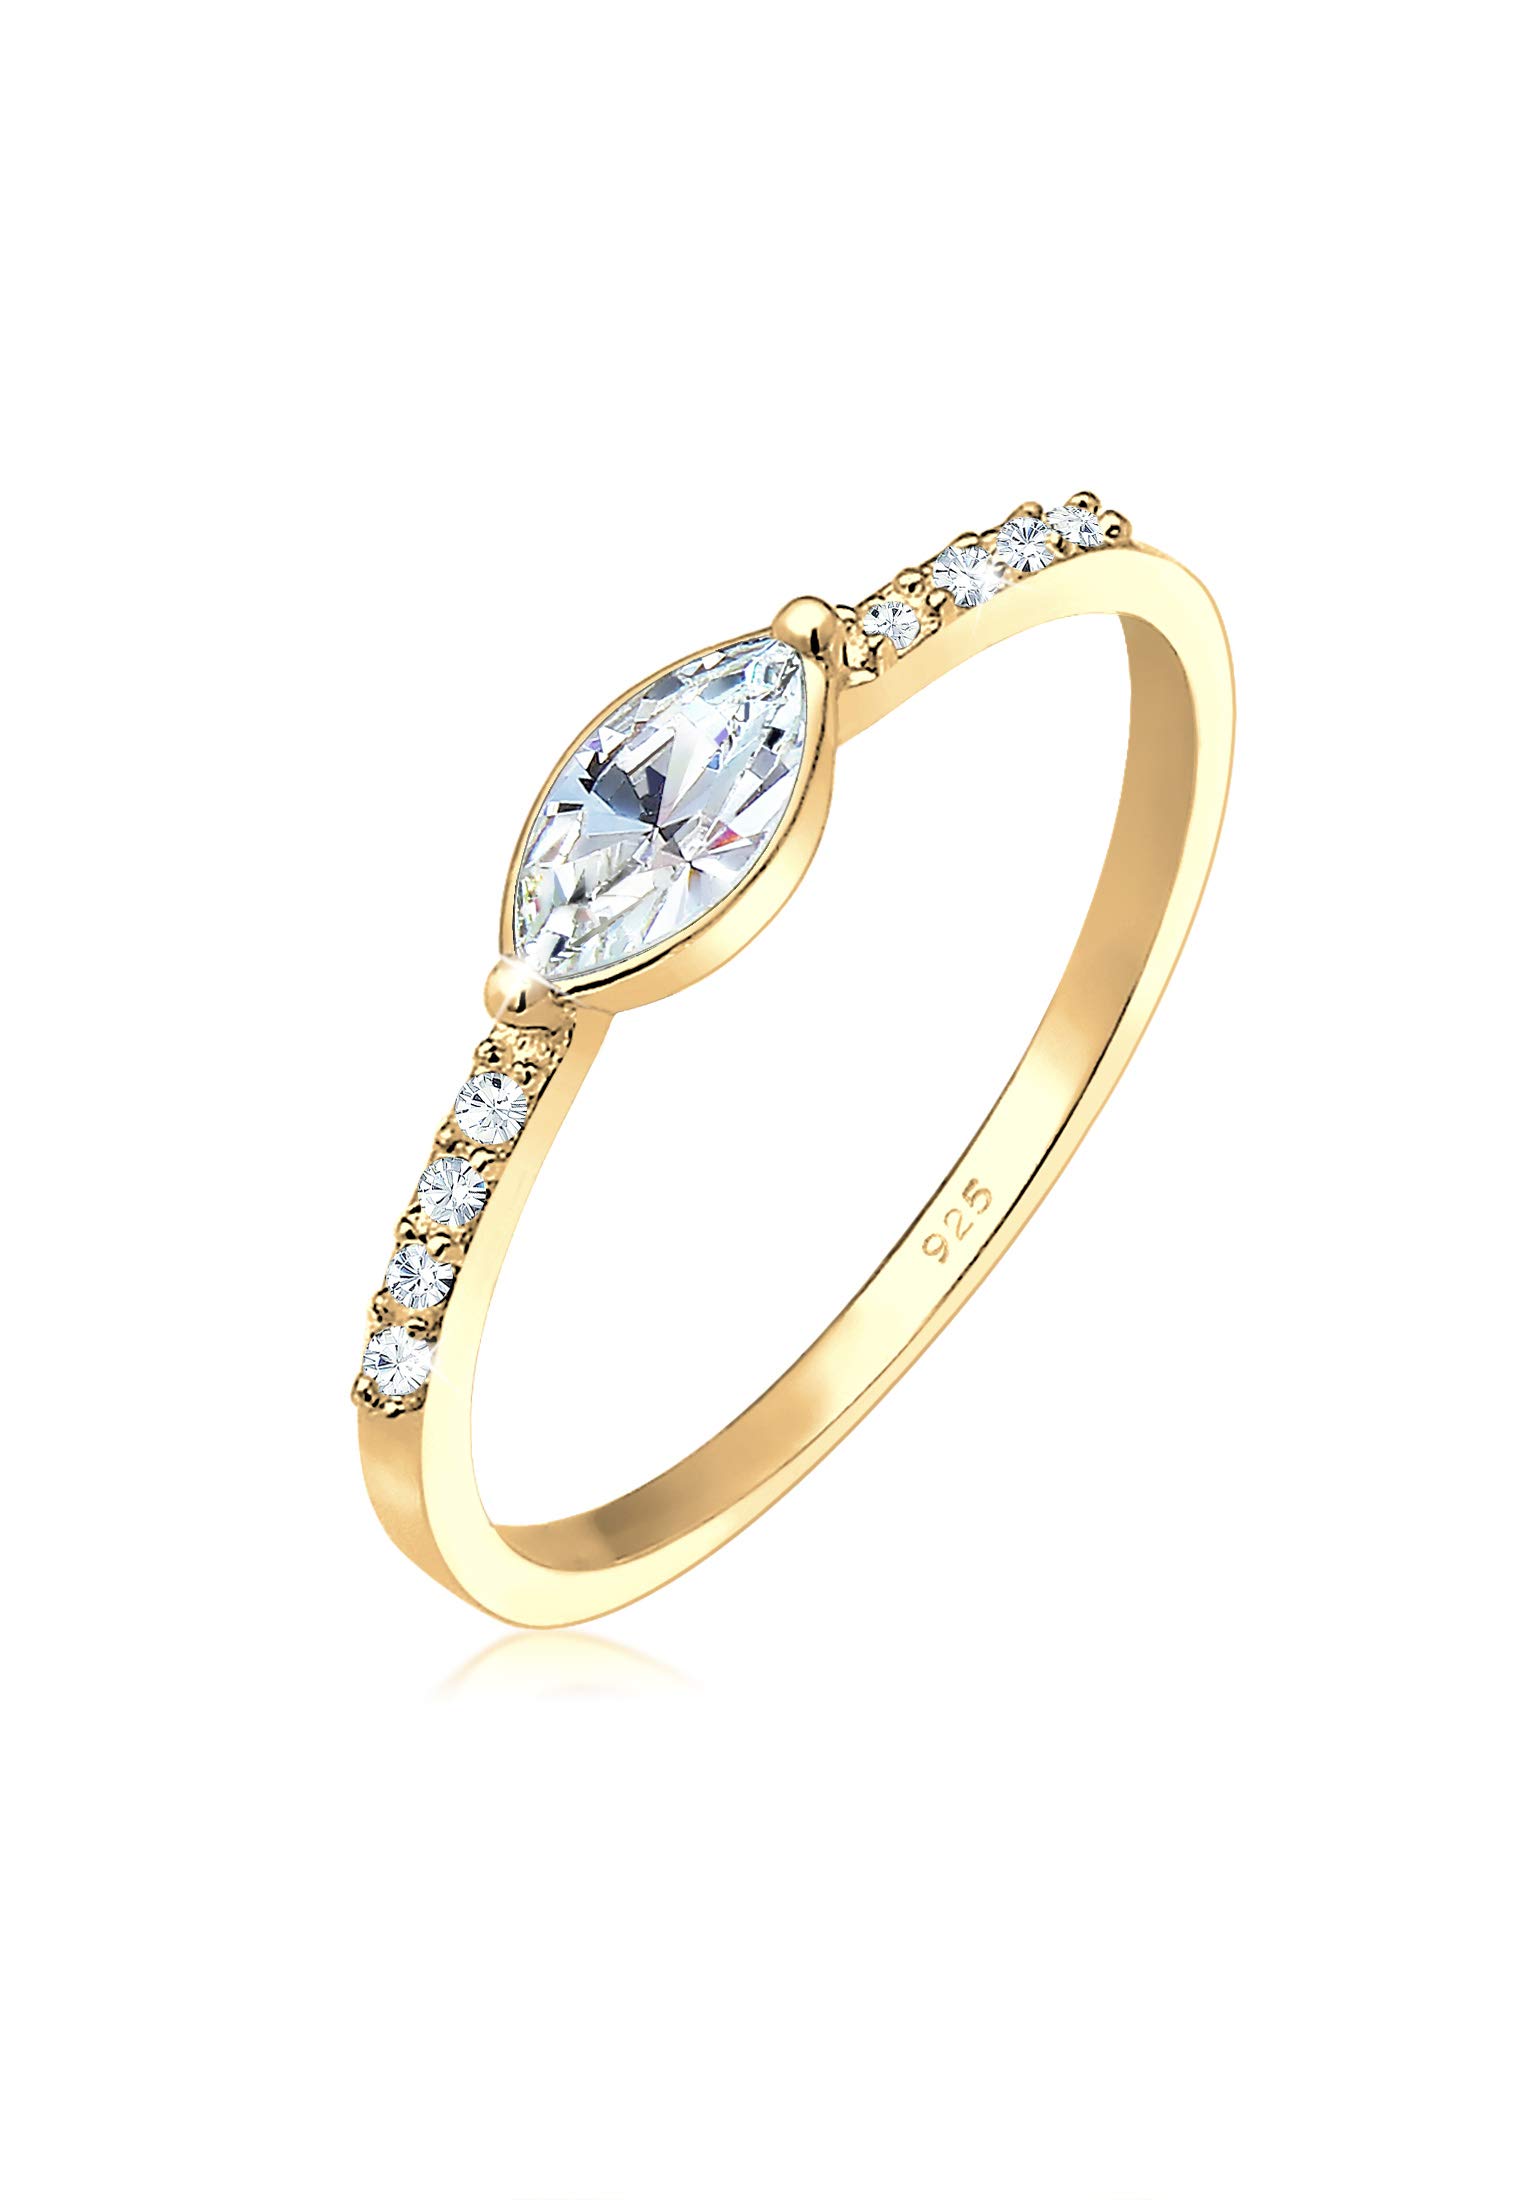 Elli Ring Damen Verlobung Elegant mit Kristalle in 925 Sterling Silber Vergoldet